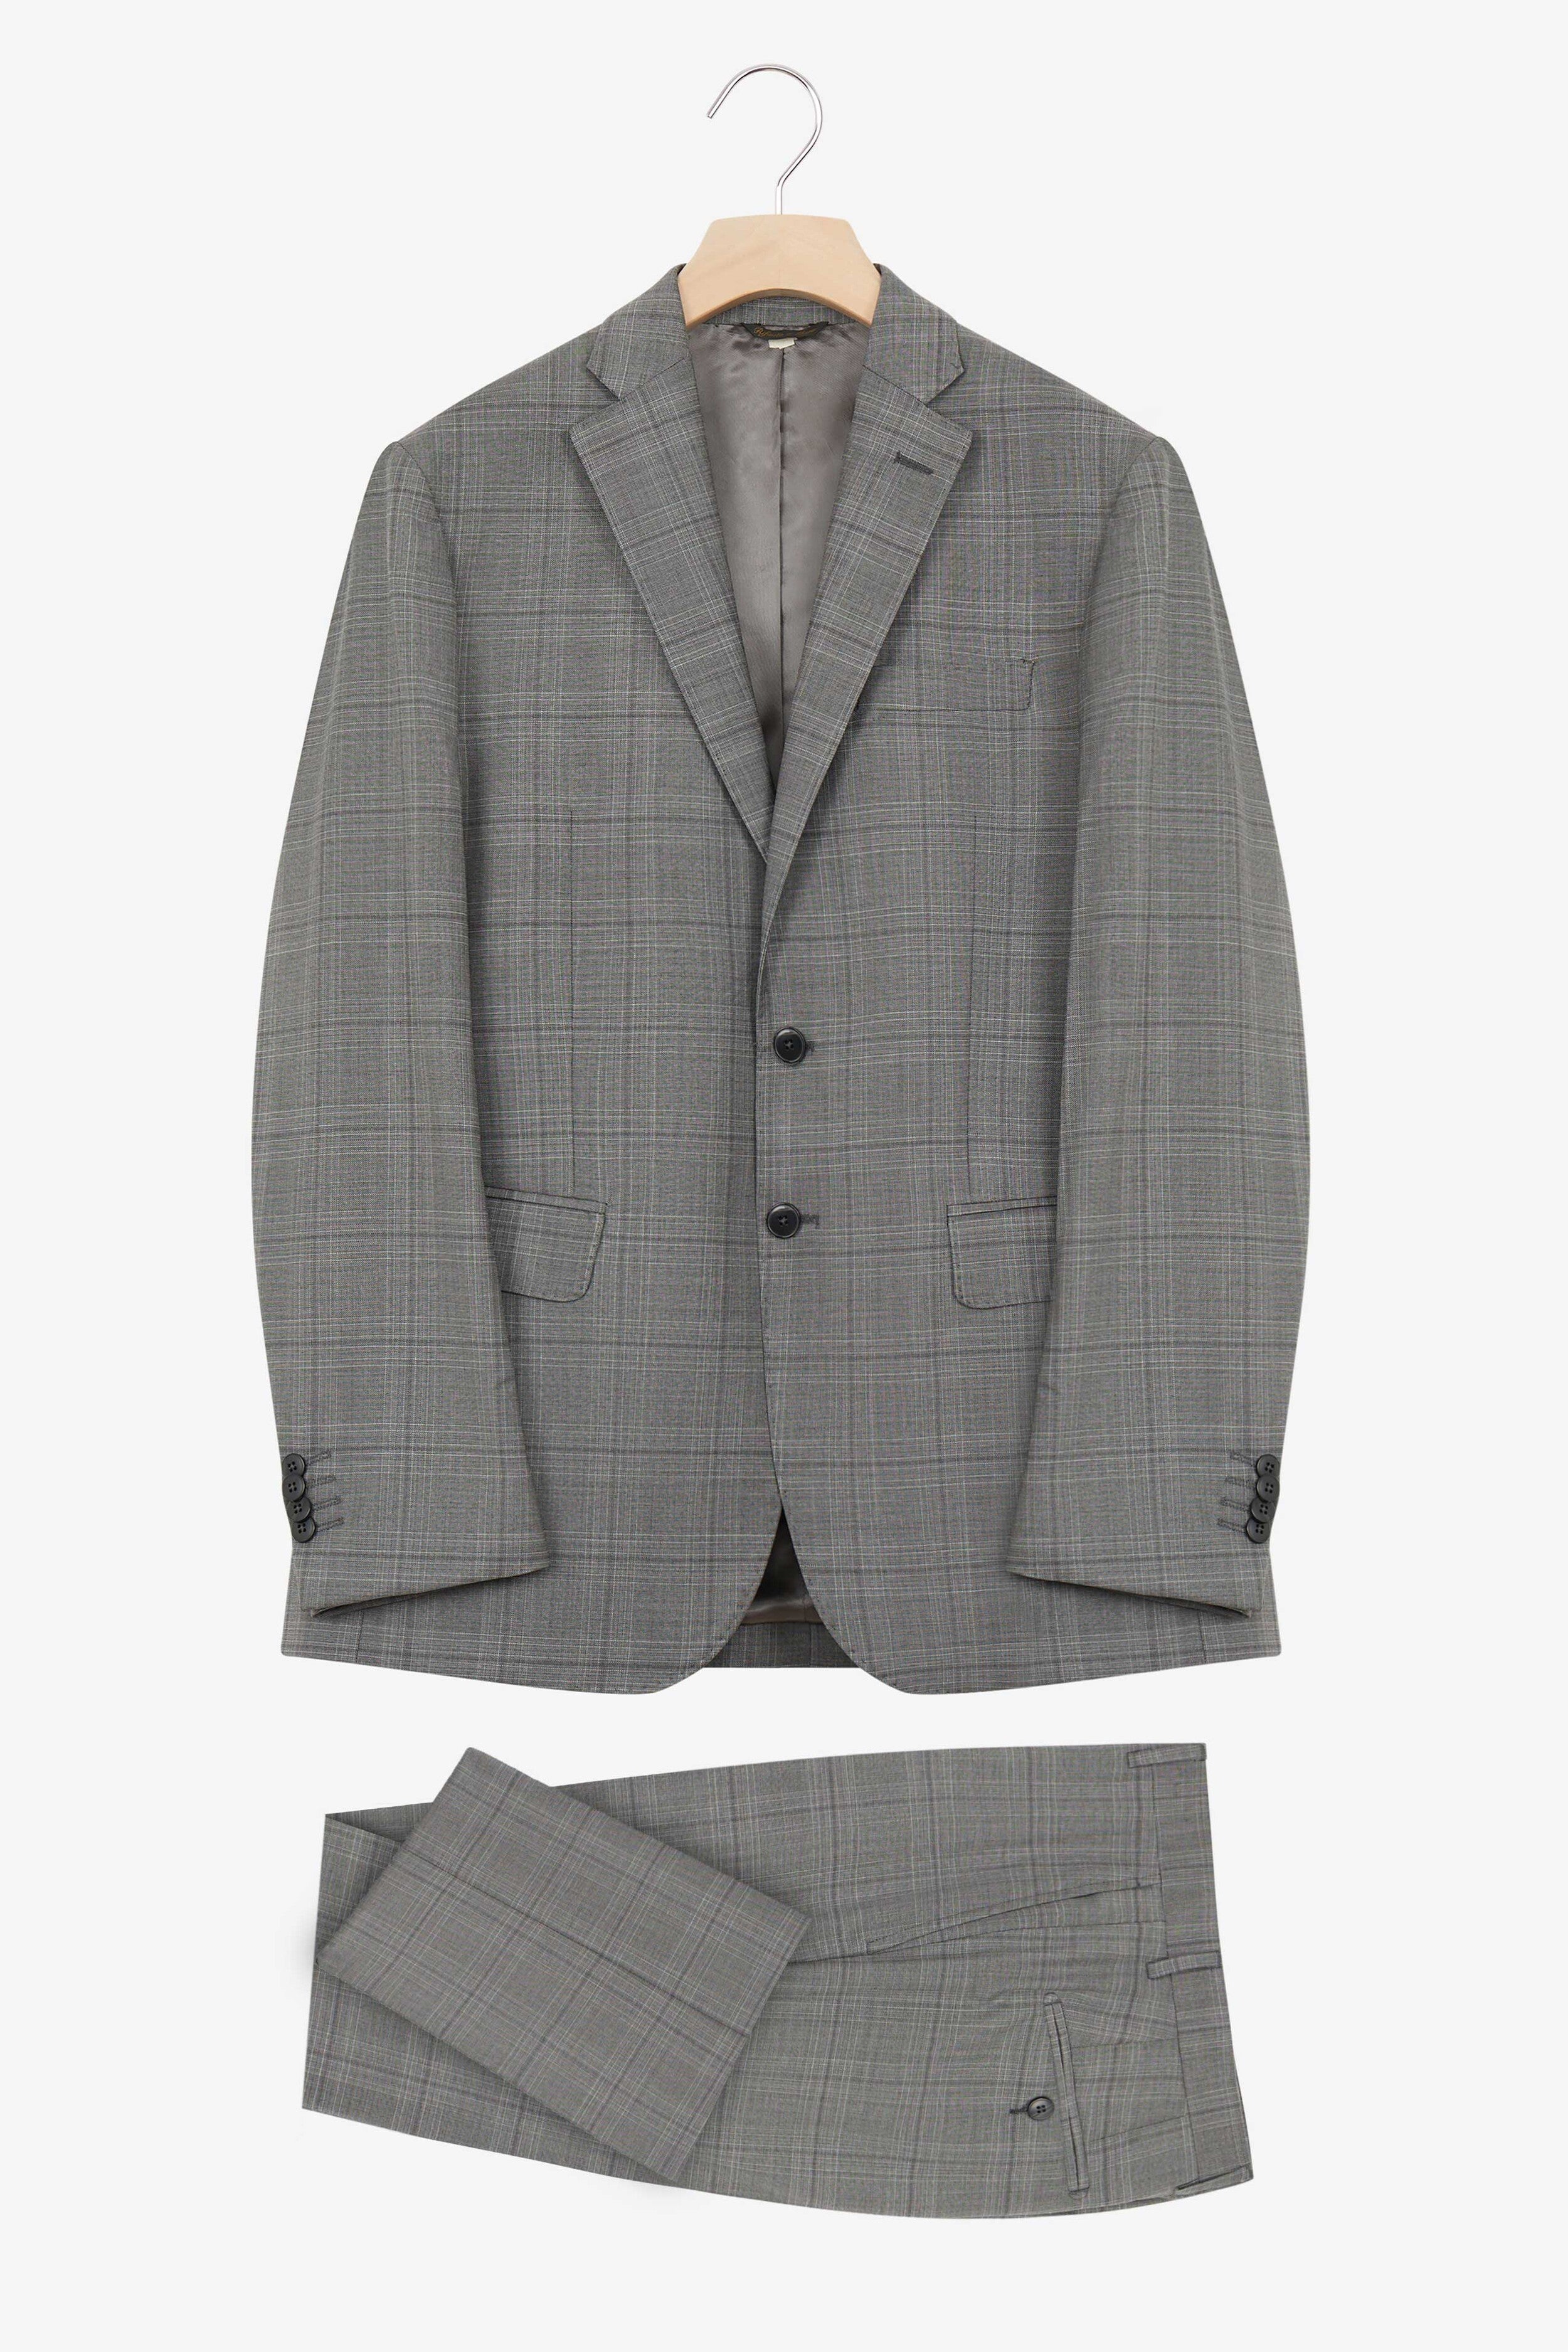 Grey plaid suit - Grey check